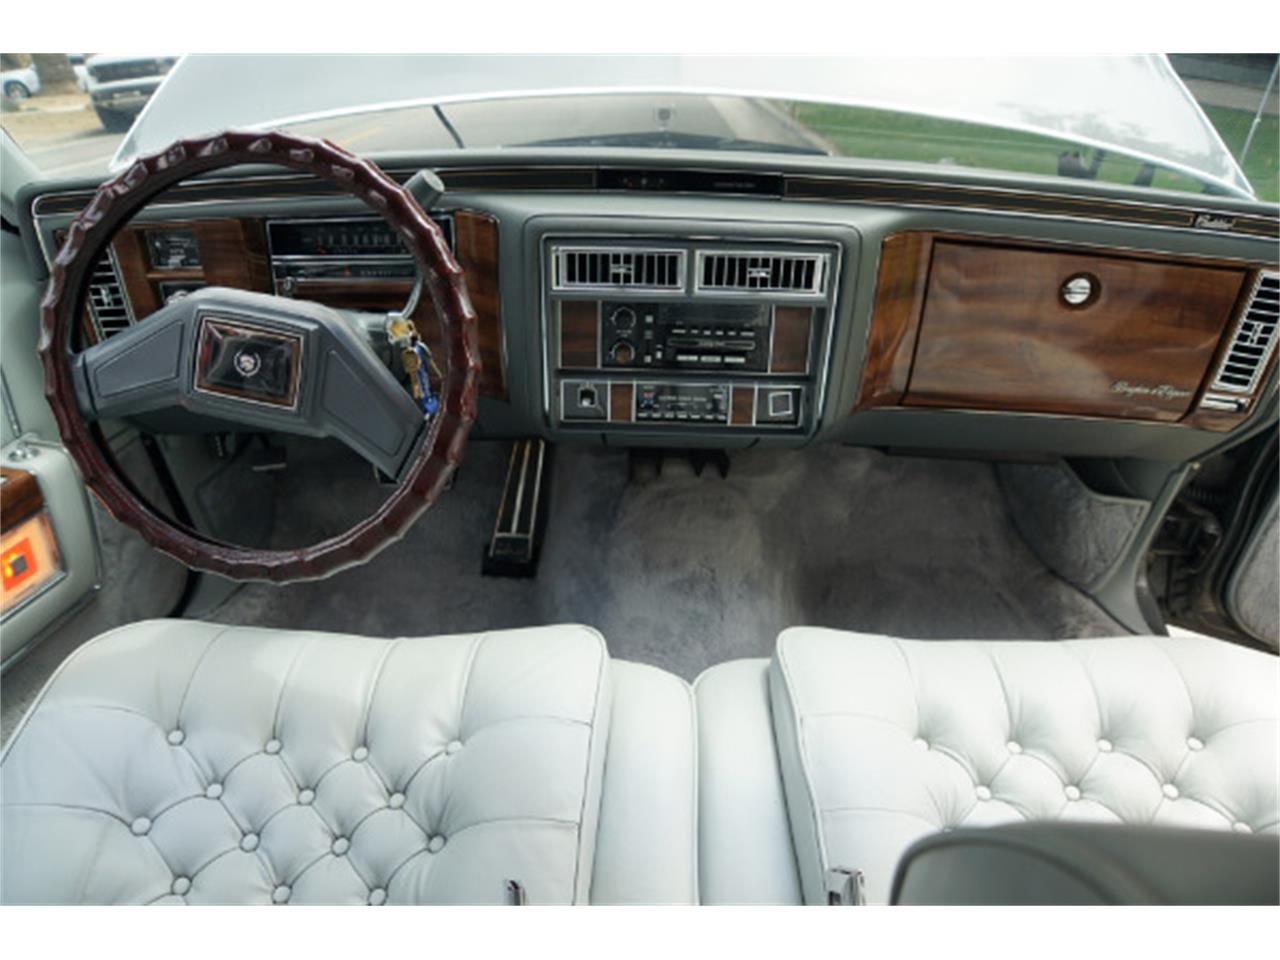 1987 Cadillac Brougham D Elegance For Sale Classiccars Com